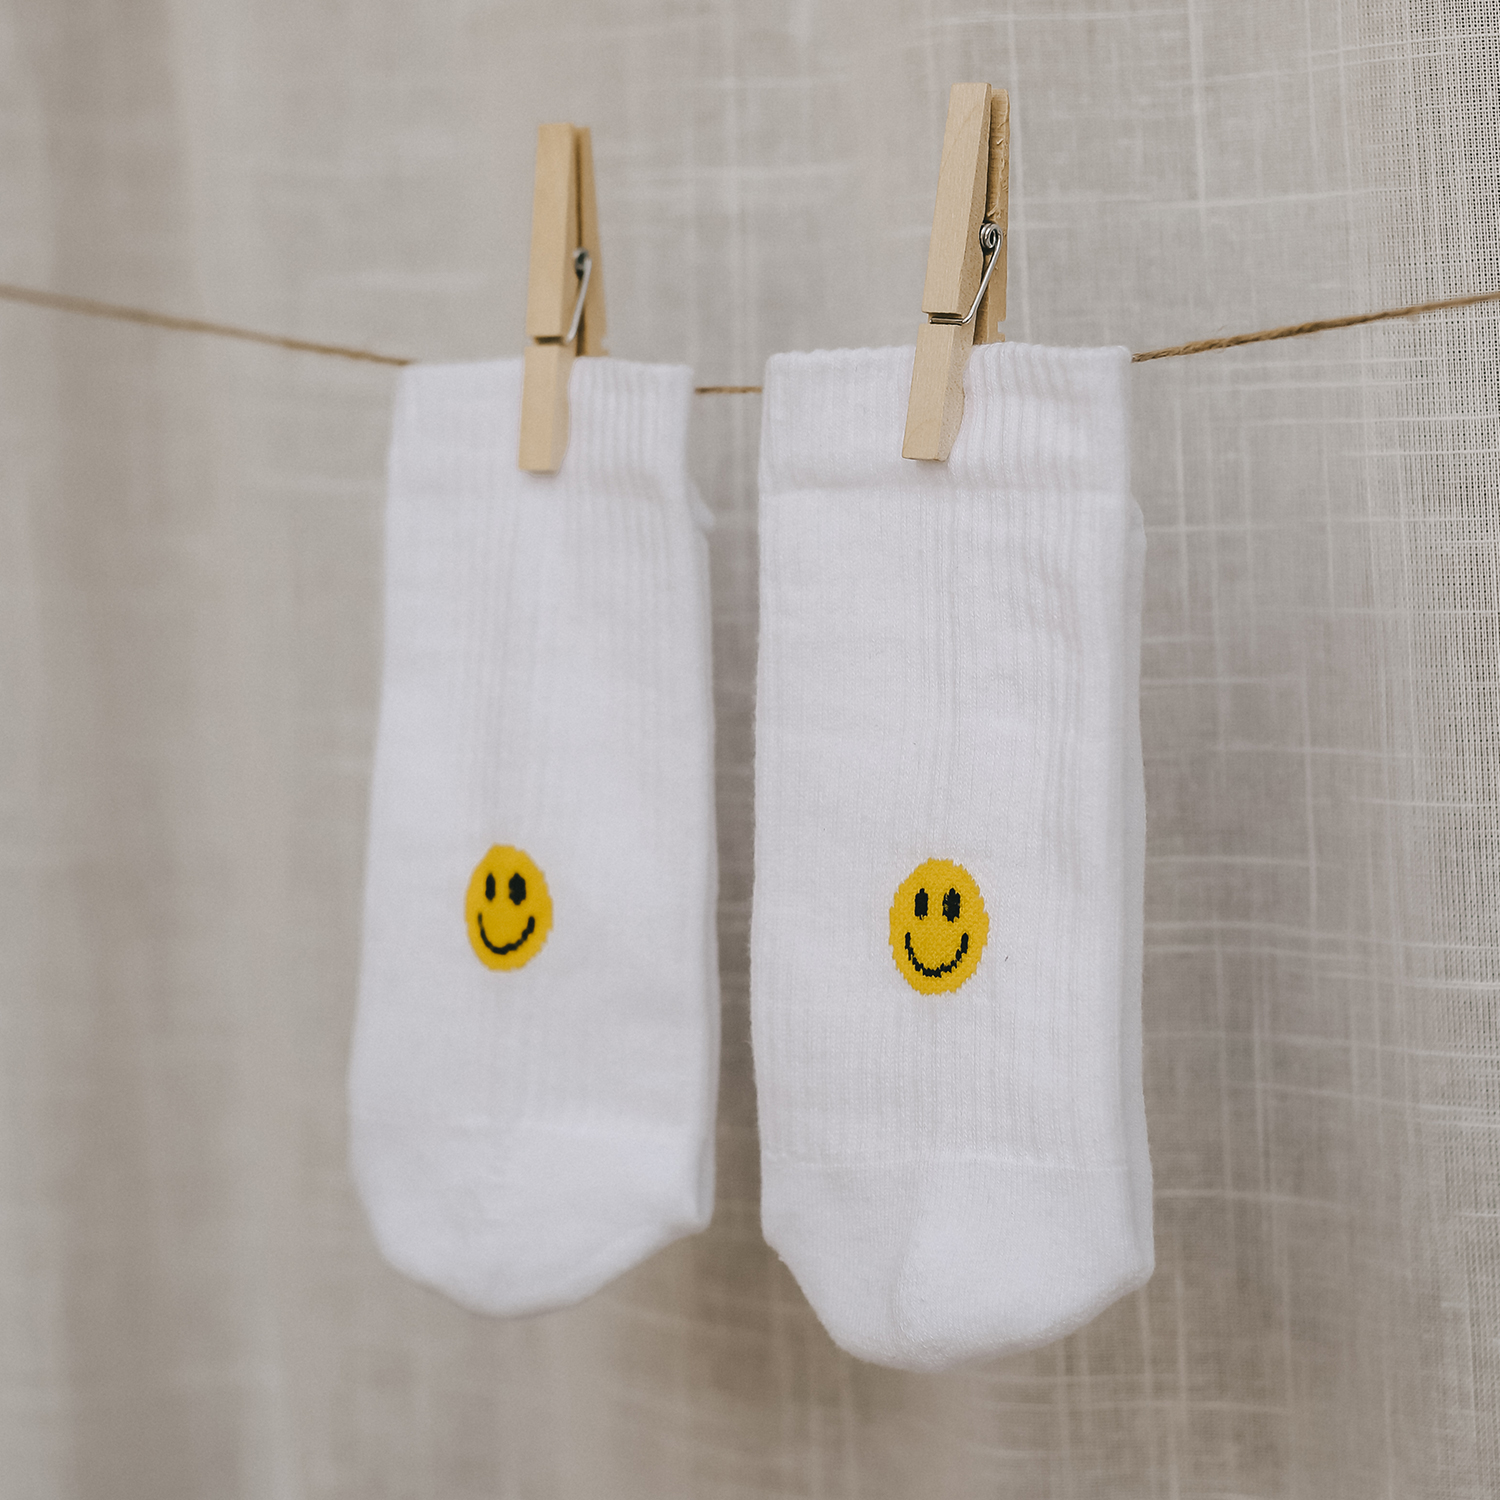 Socken Smiley gelb 39-42